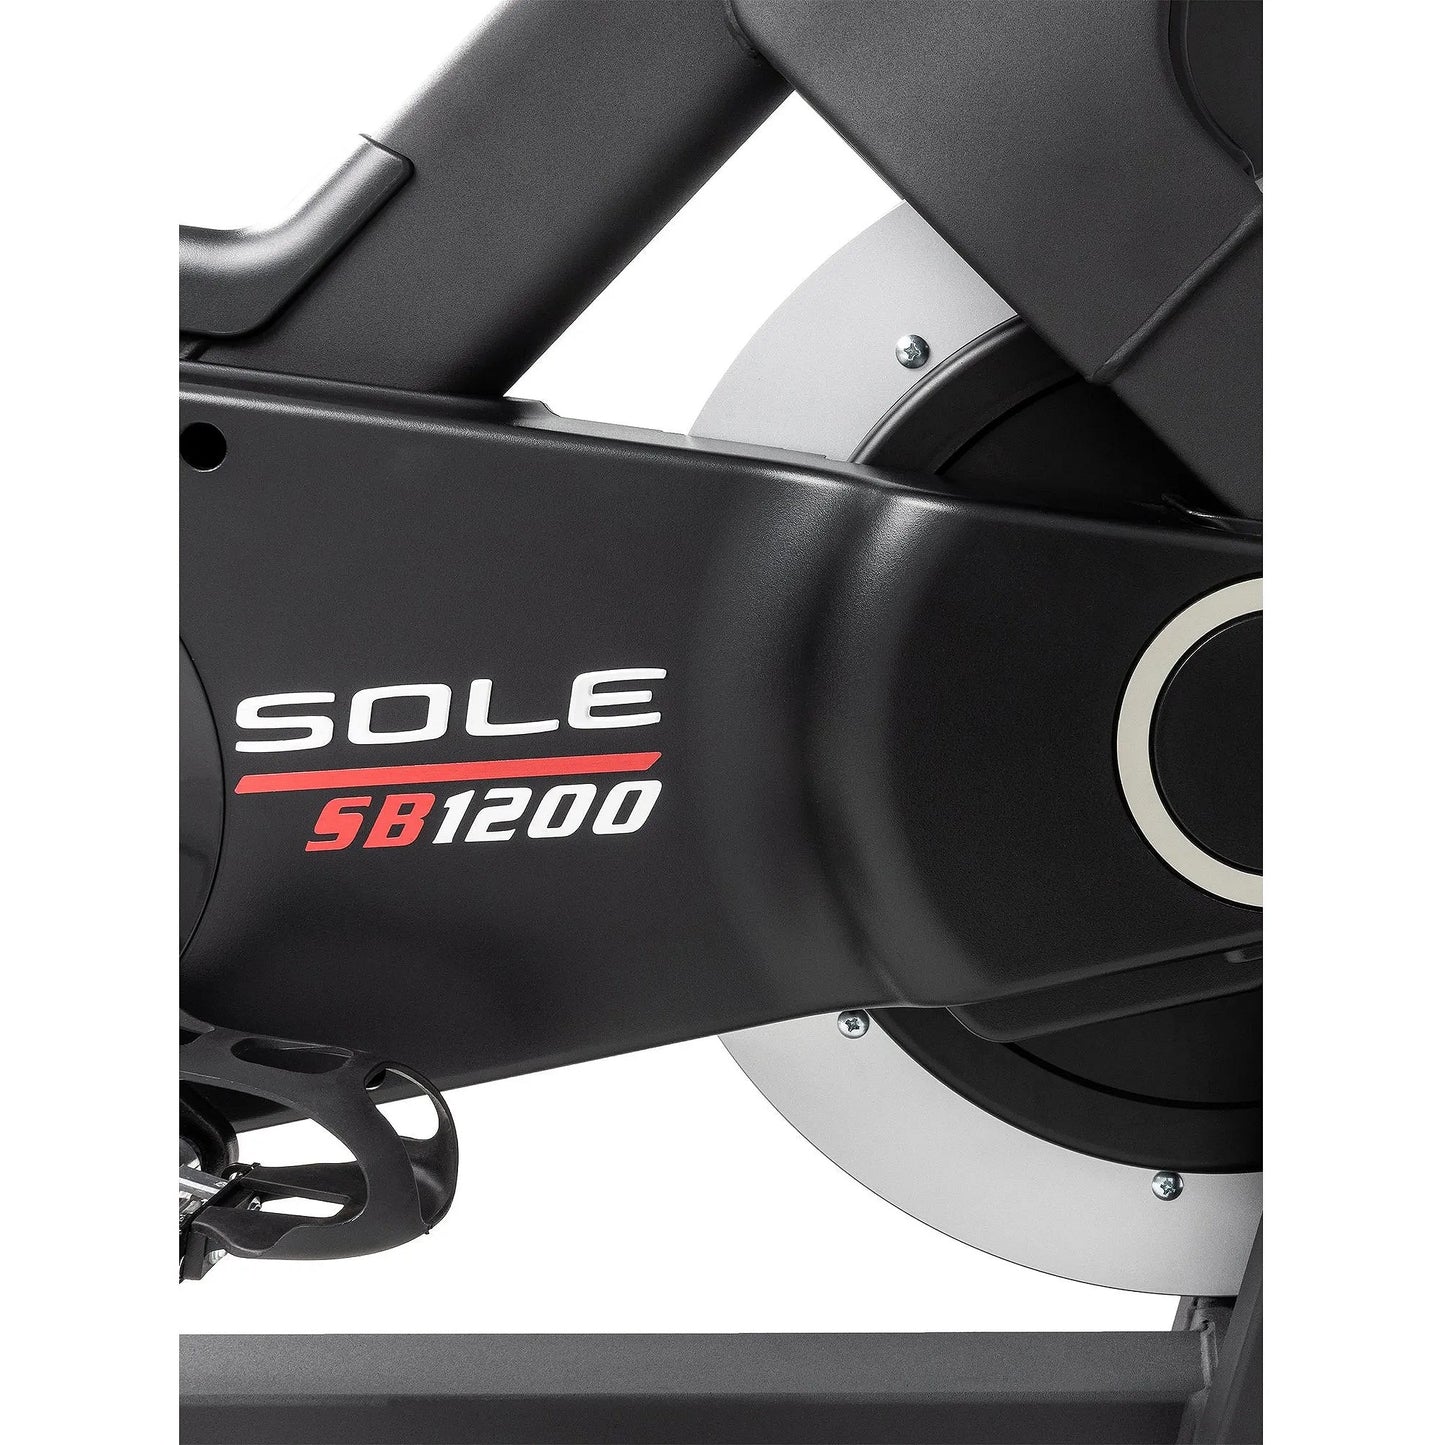 Sole Fitness SB1200 Spinning Bike